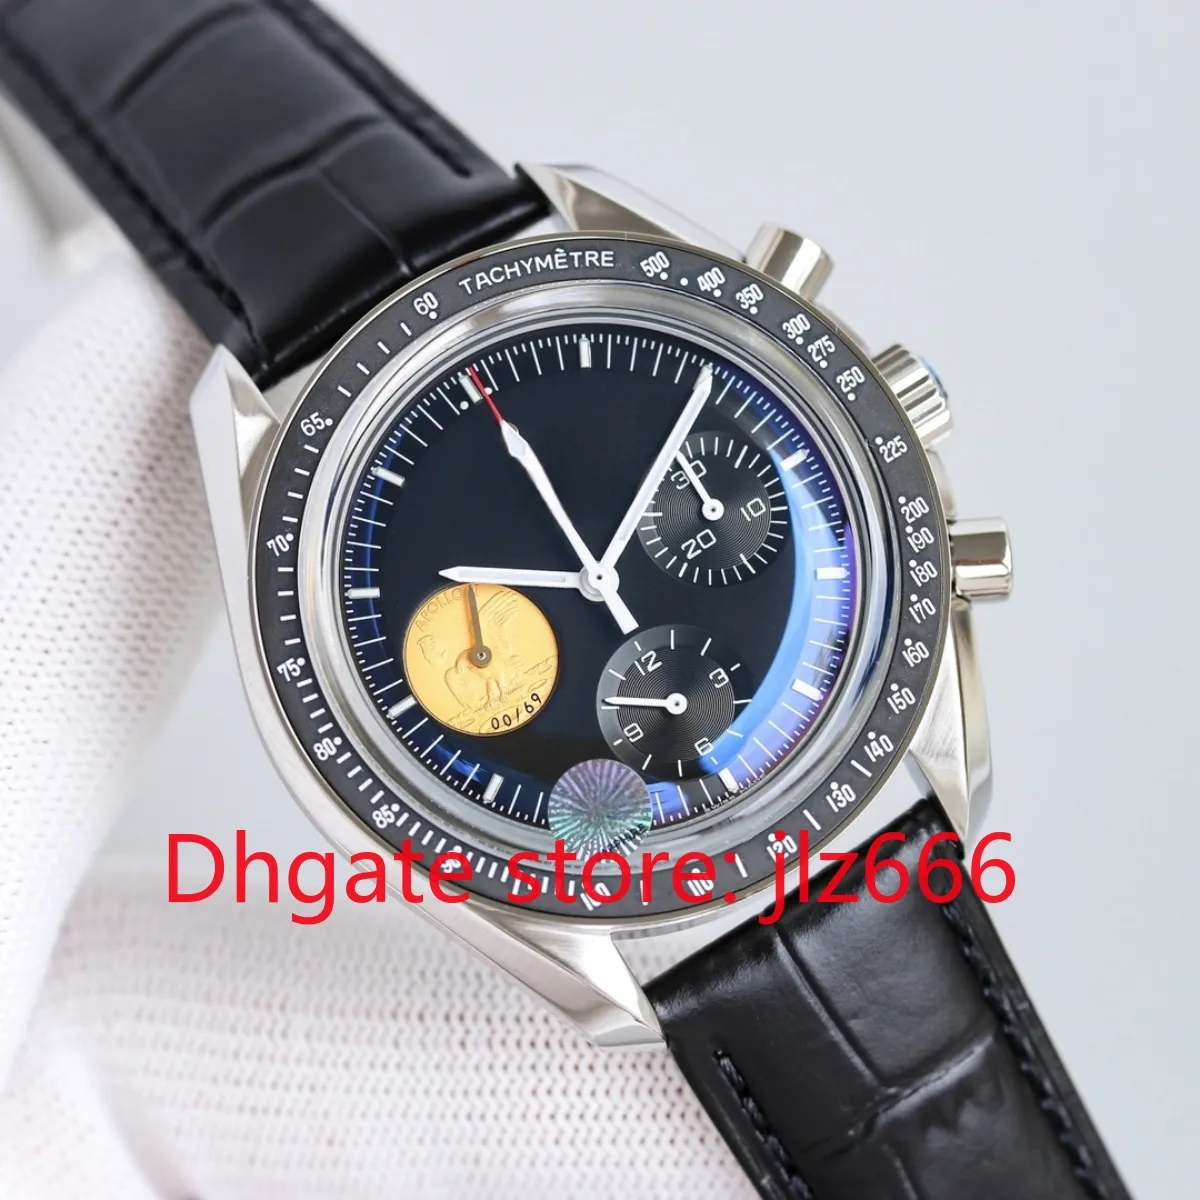 Men's watch, designer mechanical watch, highest version (OMJ) 42mm-44mm Super Series series, multifunctional timepiece, sapphire crystal surface, waterproof,ee